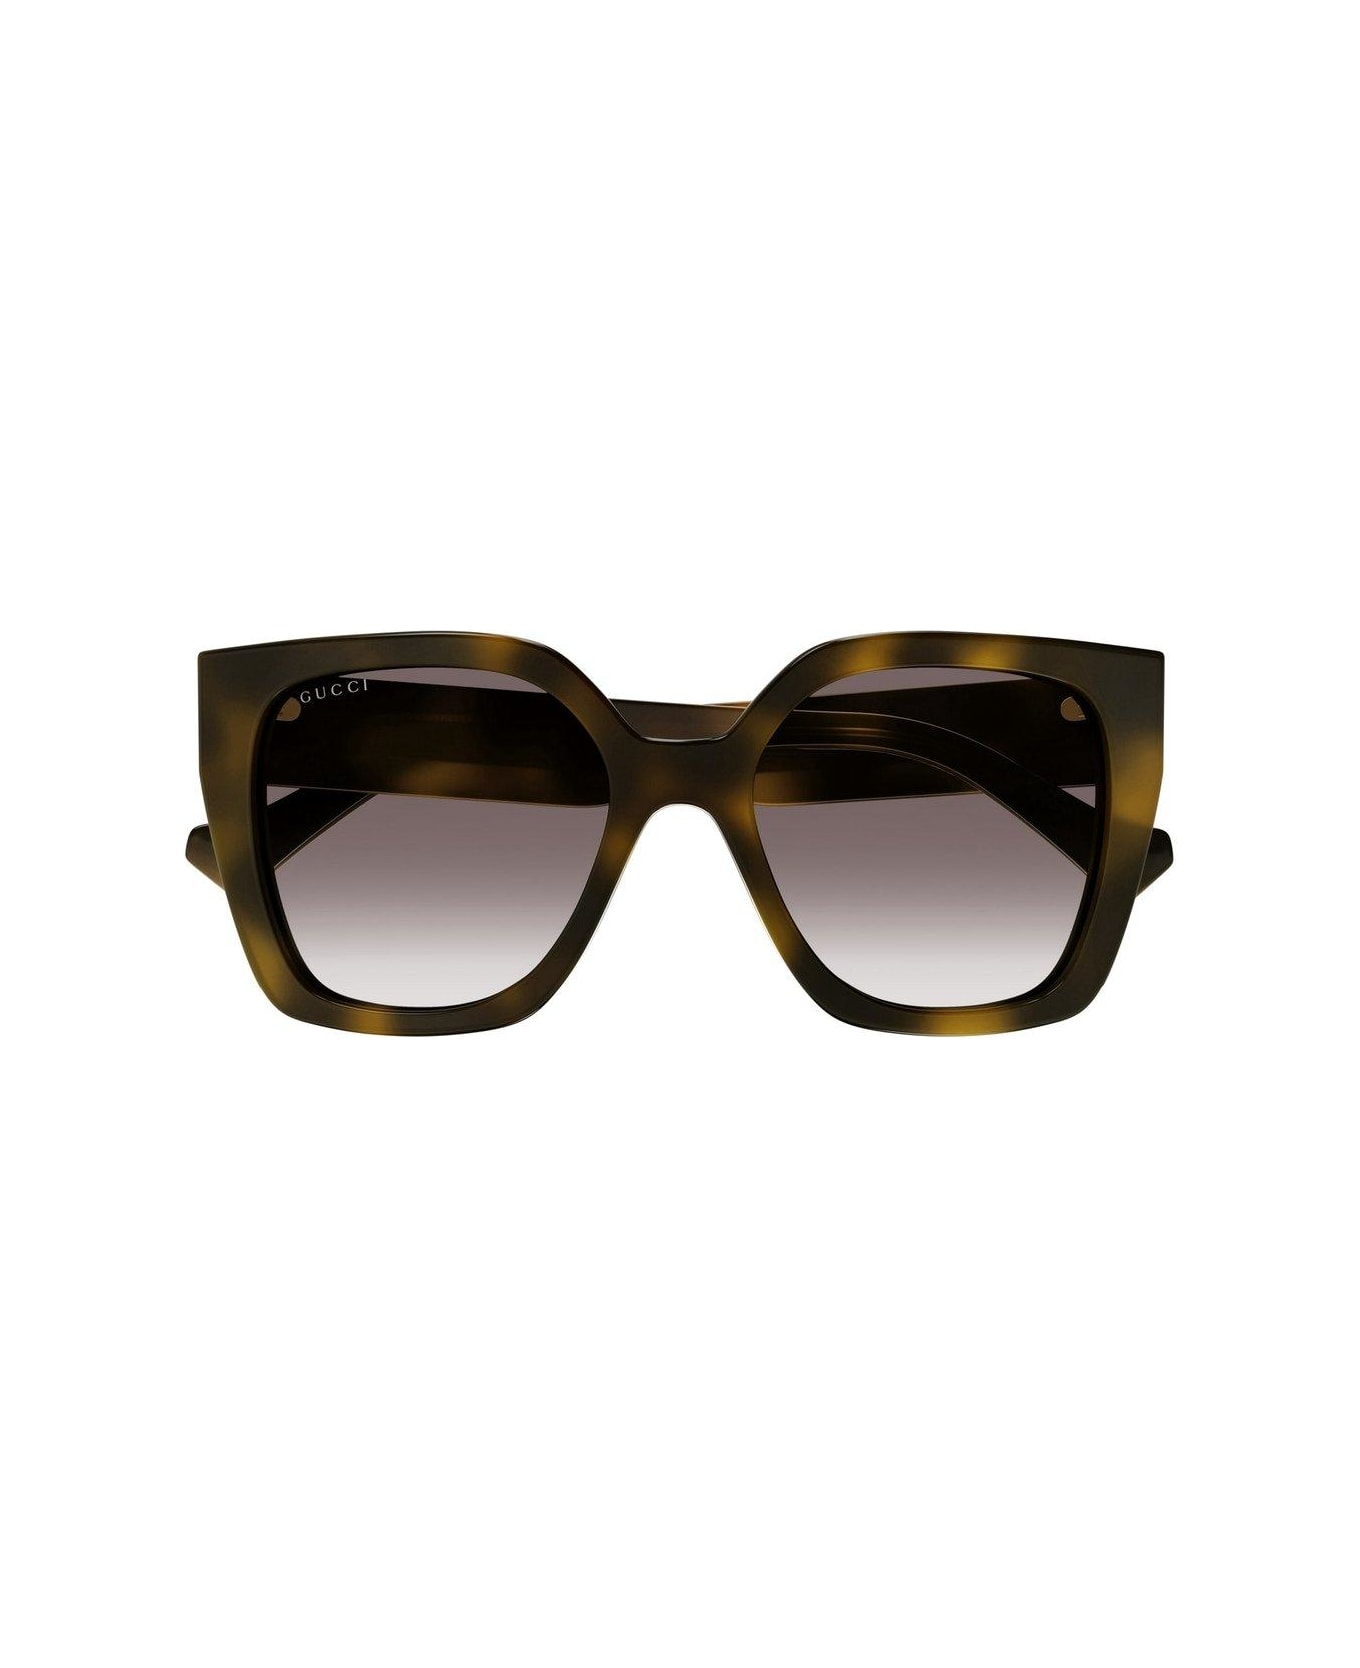 Gucci Eyewear Butterfly Frame Sunglasses Sunglasses - 003 HAVANA CRYSTAL BROWN